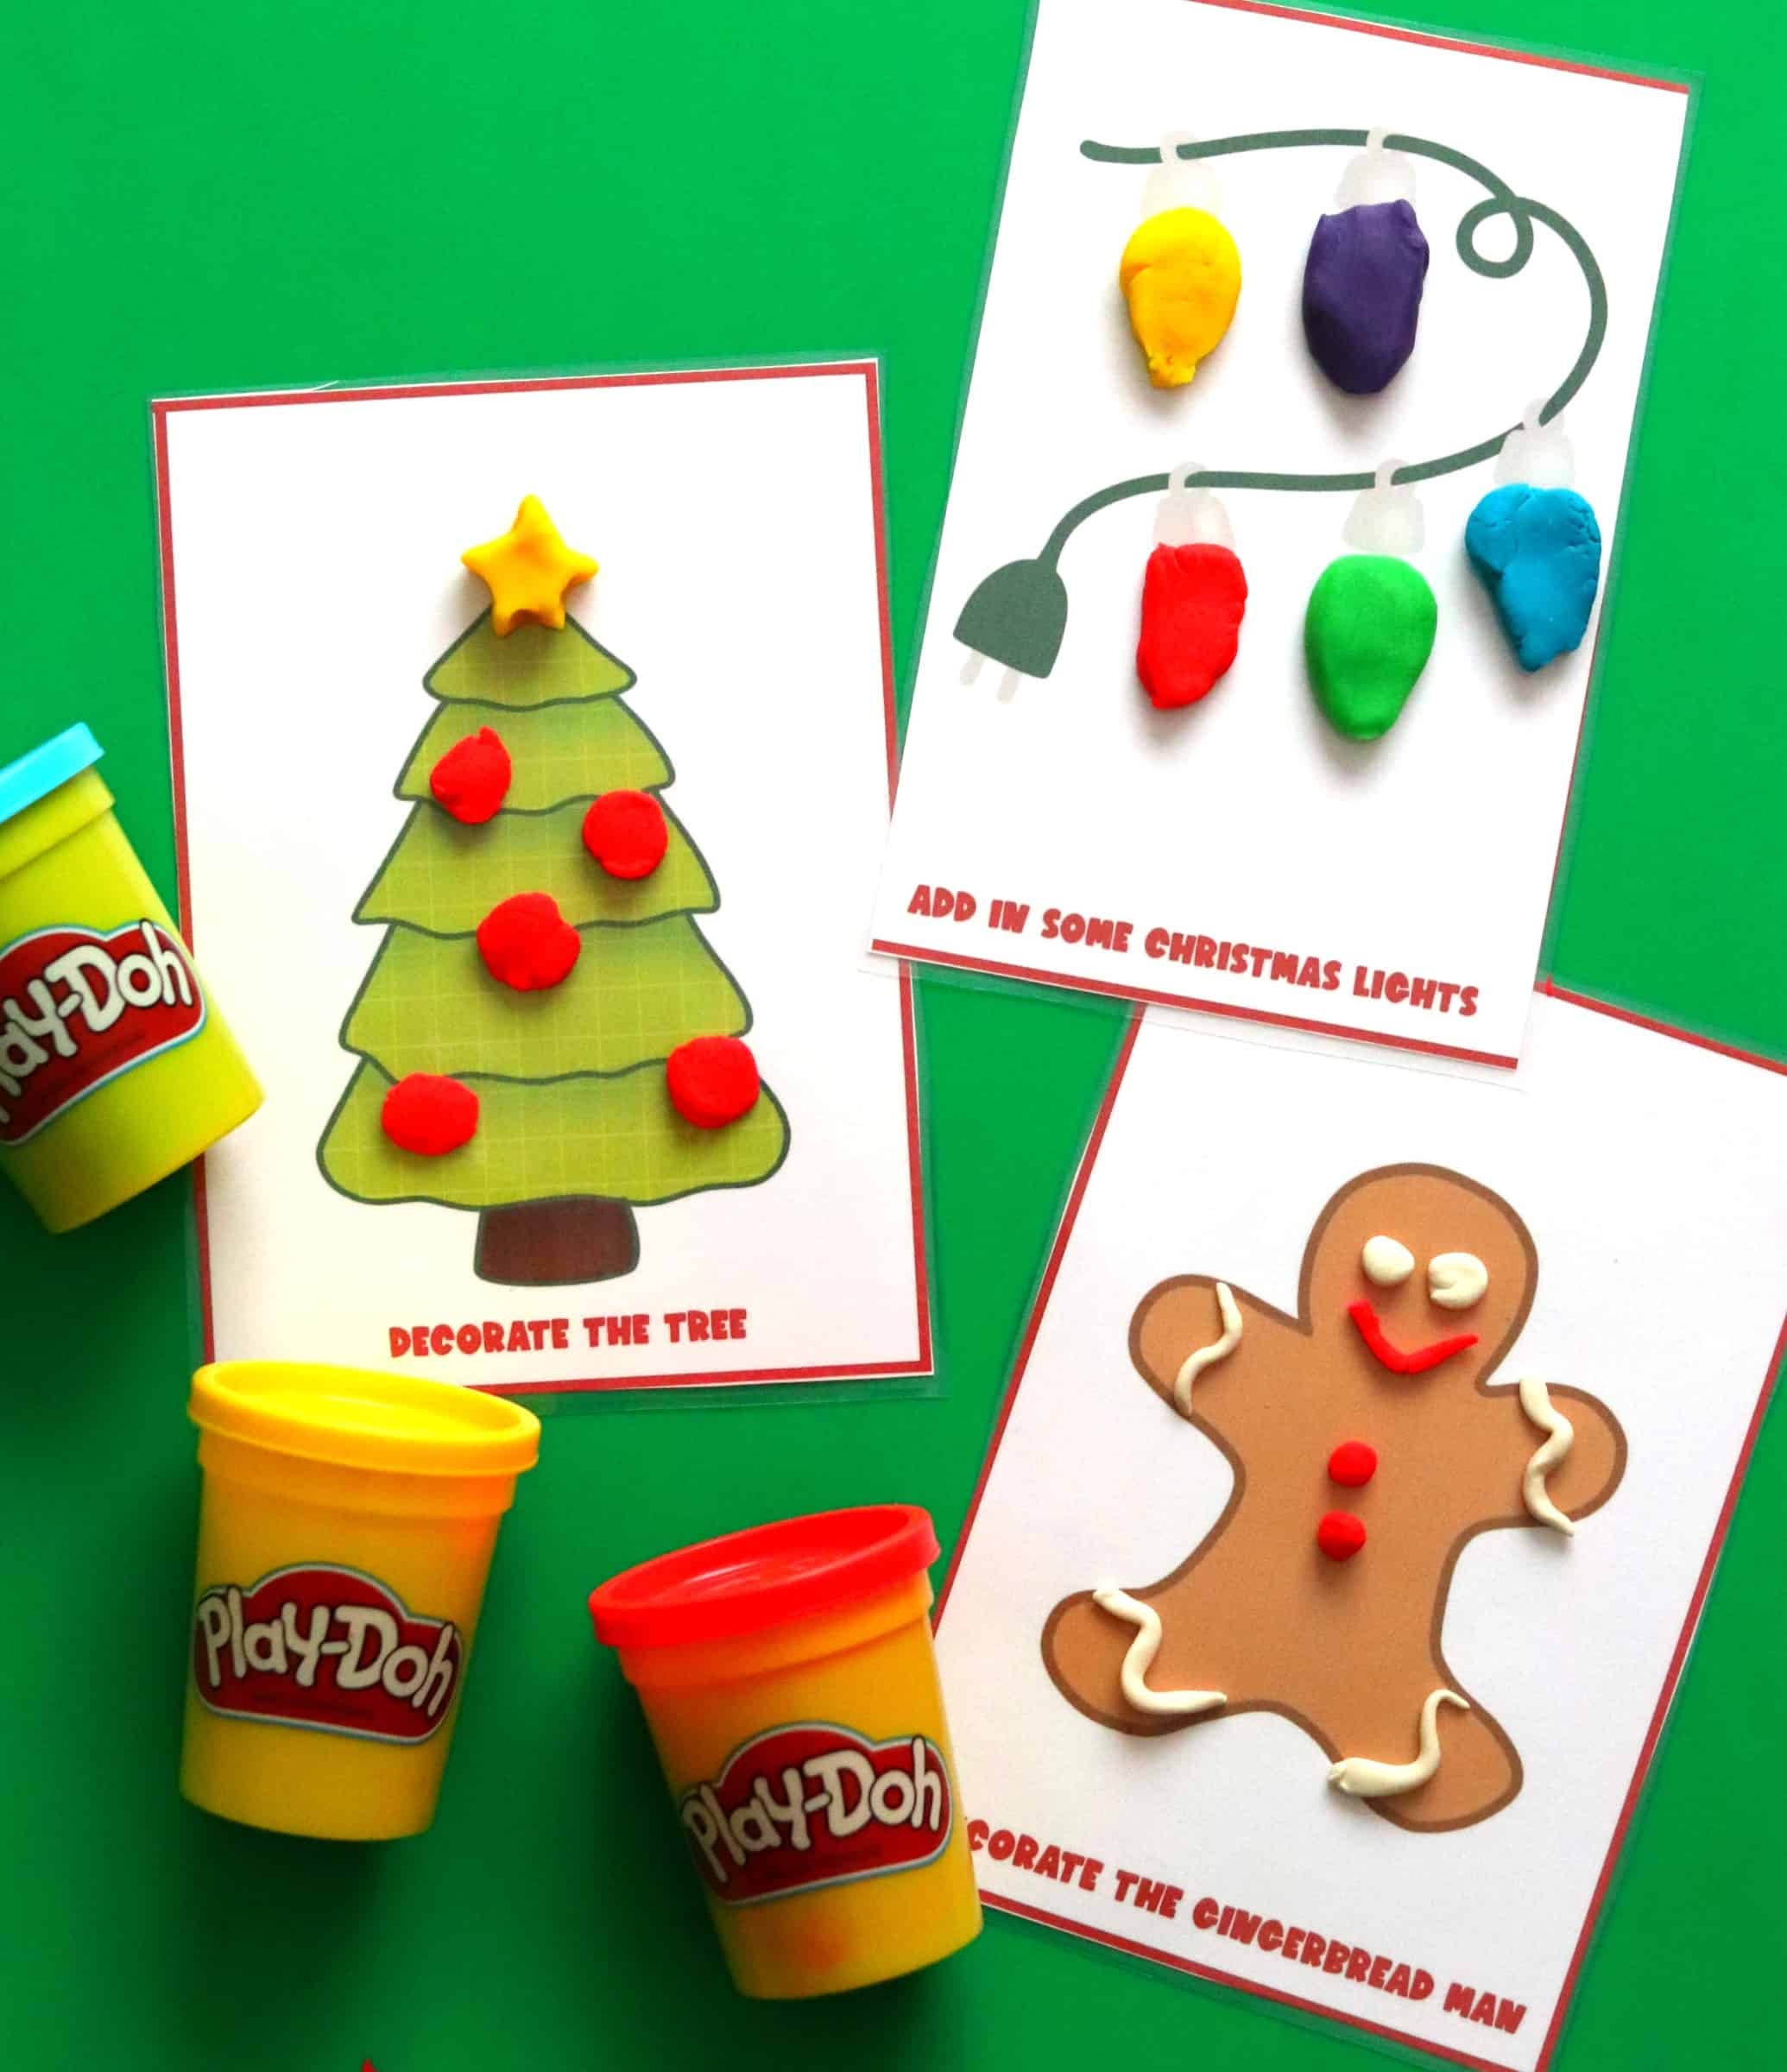 Christmas Playdough - The Best Ideas for Kids